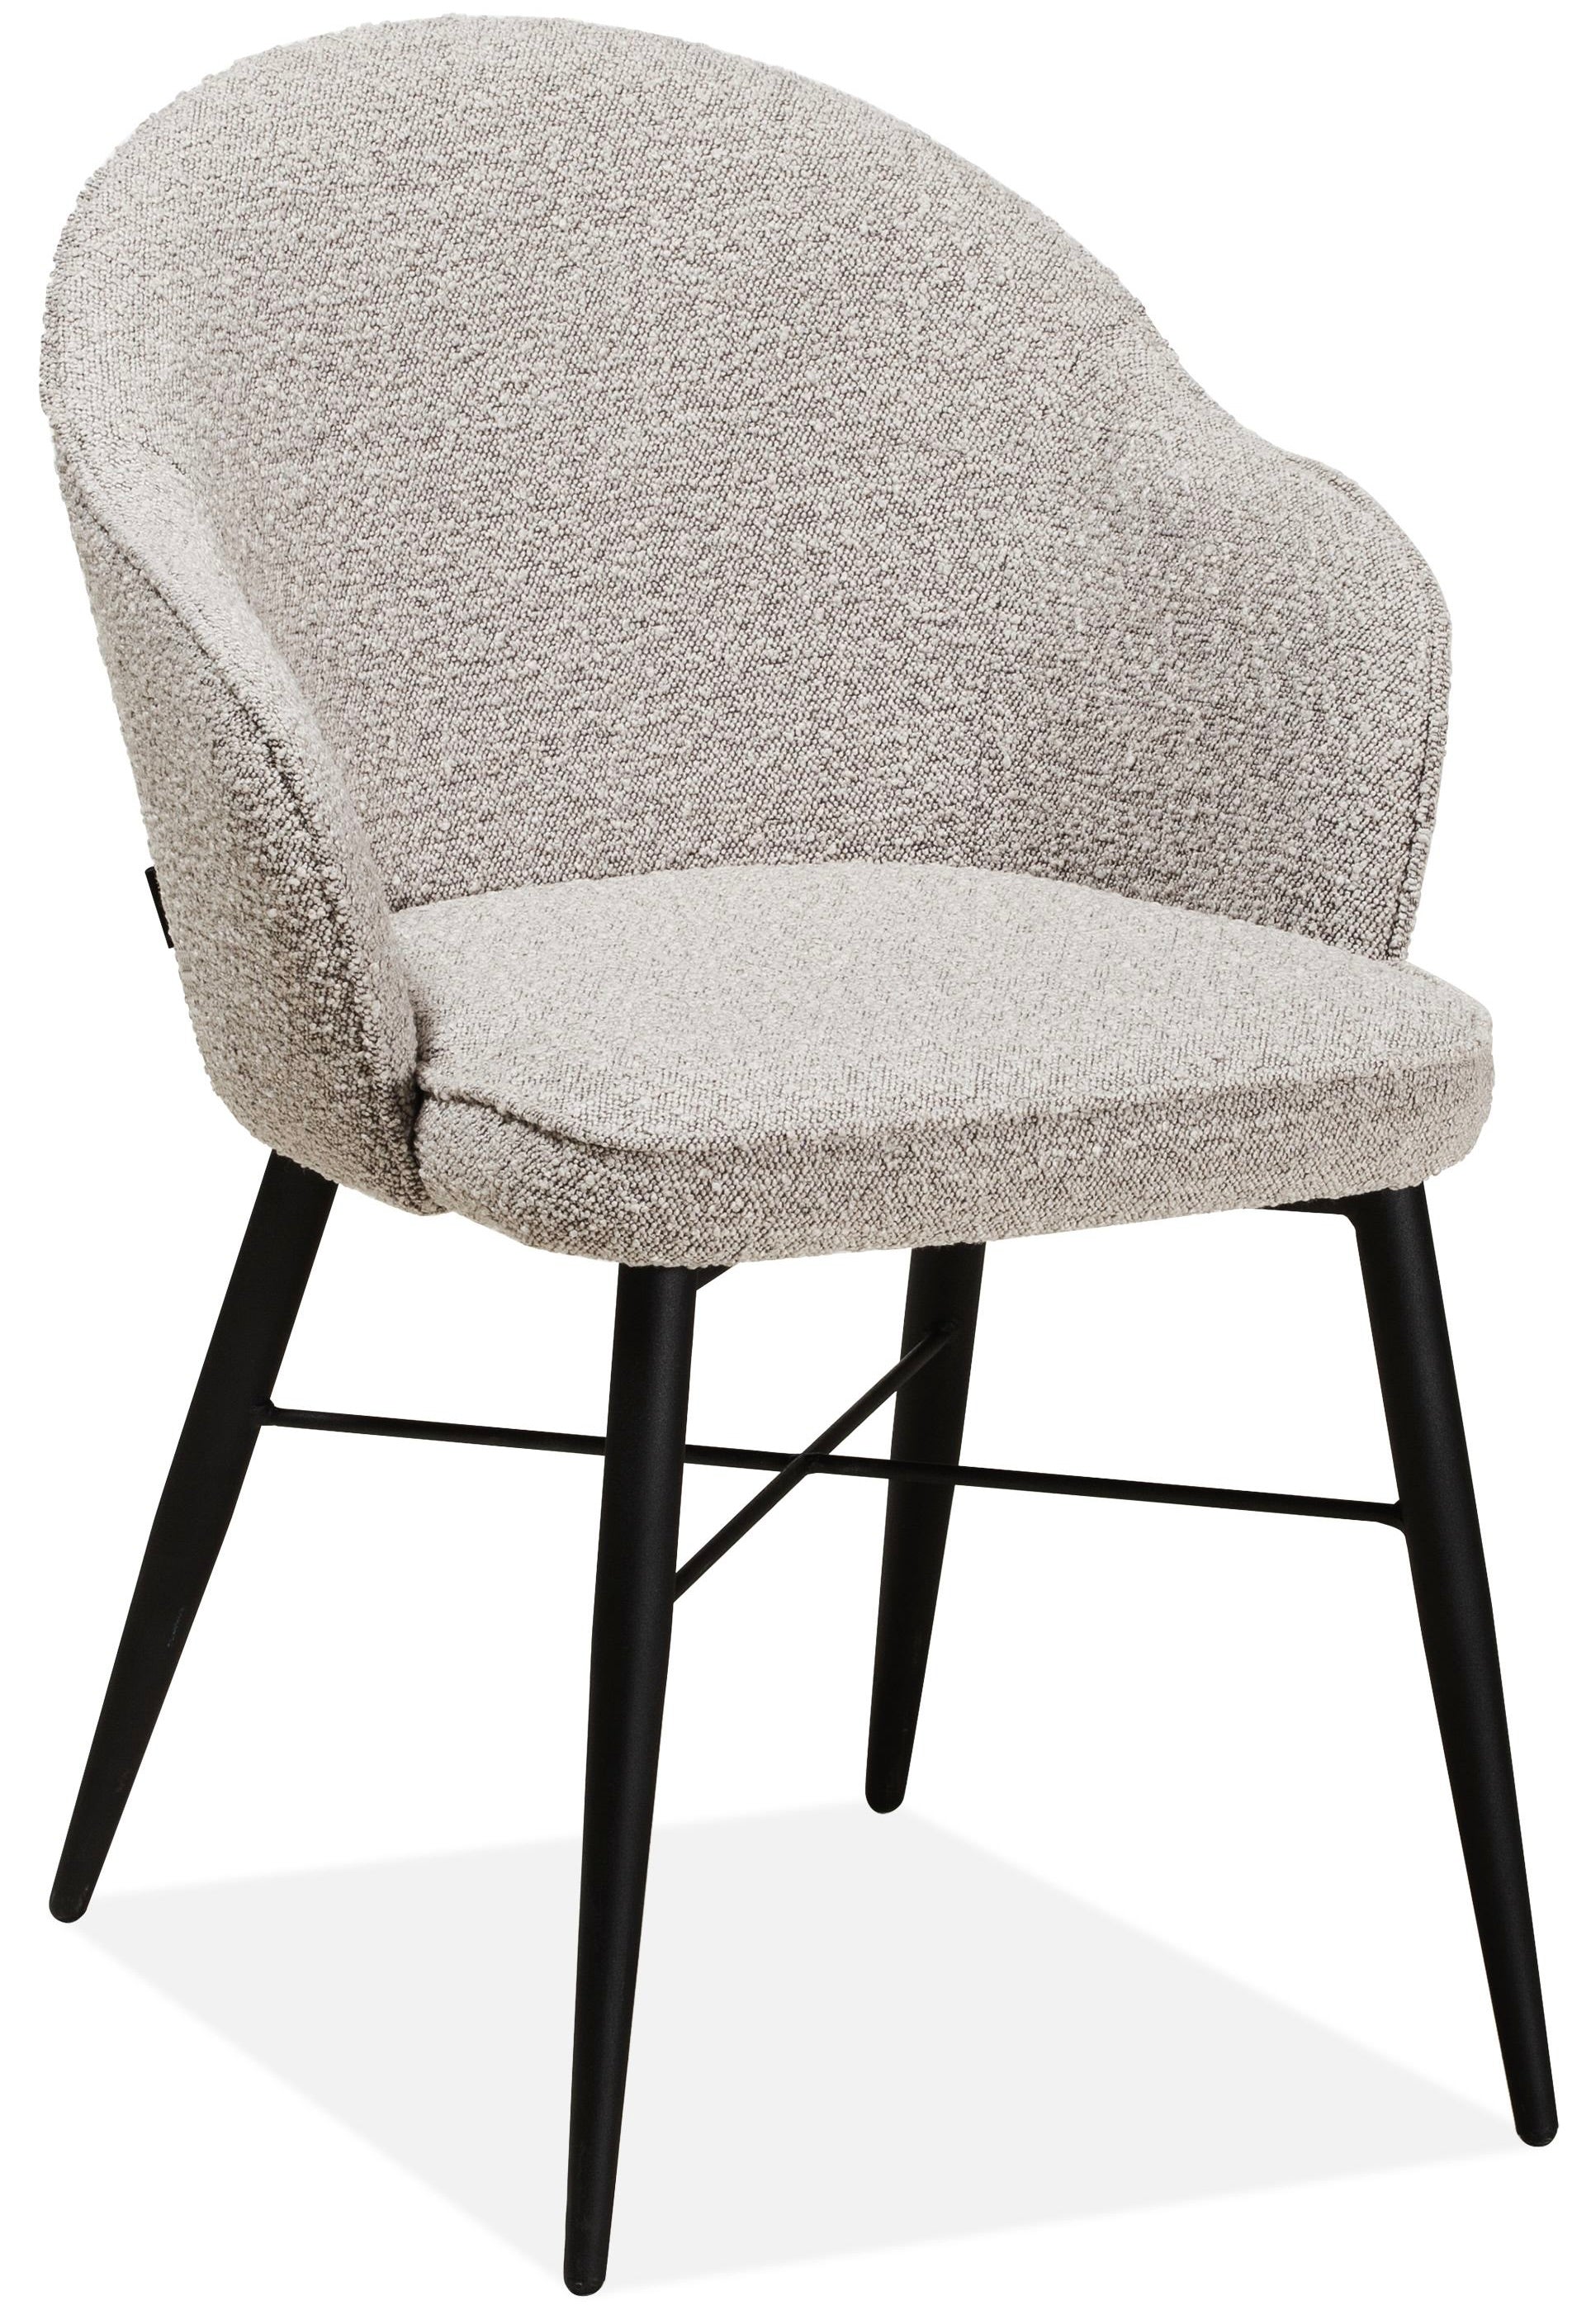 Armlehnen Stuhl Billy Teddy Stoff in 3 Farben weiß hellgrau anthrazit-grau